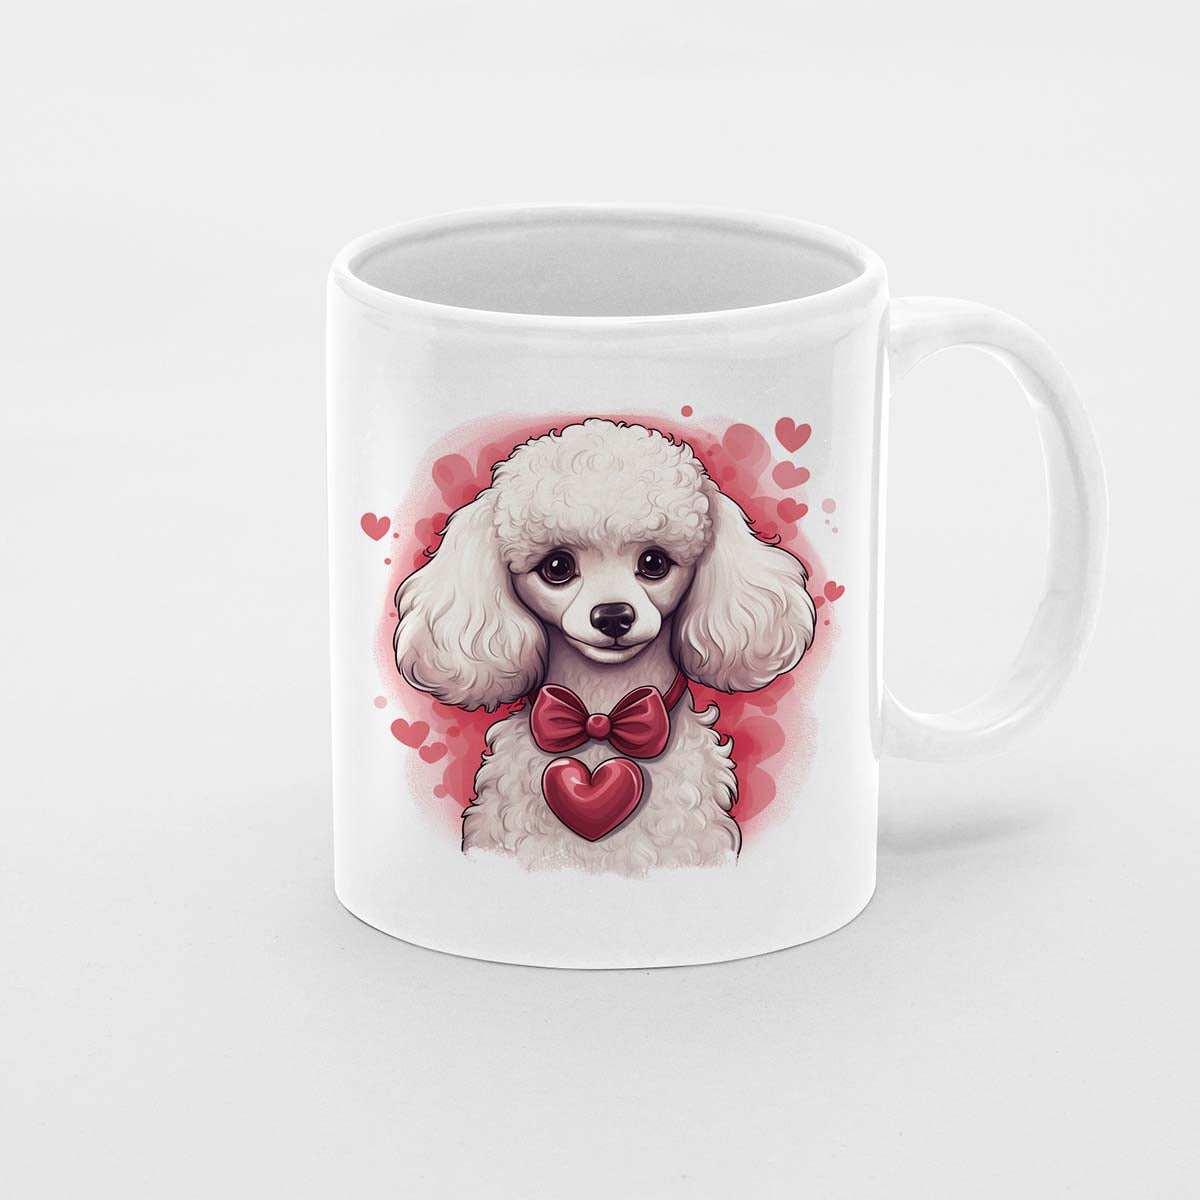 Custom Valentine's Day Dog Mug, Personalized Valentine's Day Gift for Dog Lover, Cute Poodle Love Ceramic Mug, Dog Coffee Mugs, Personalized Pet Mugs, Cute Valentine Puppy Heart Ceramic Mug, Valentines Gift